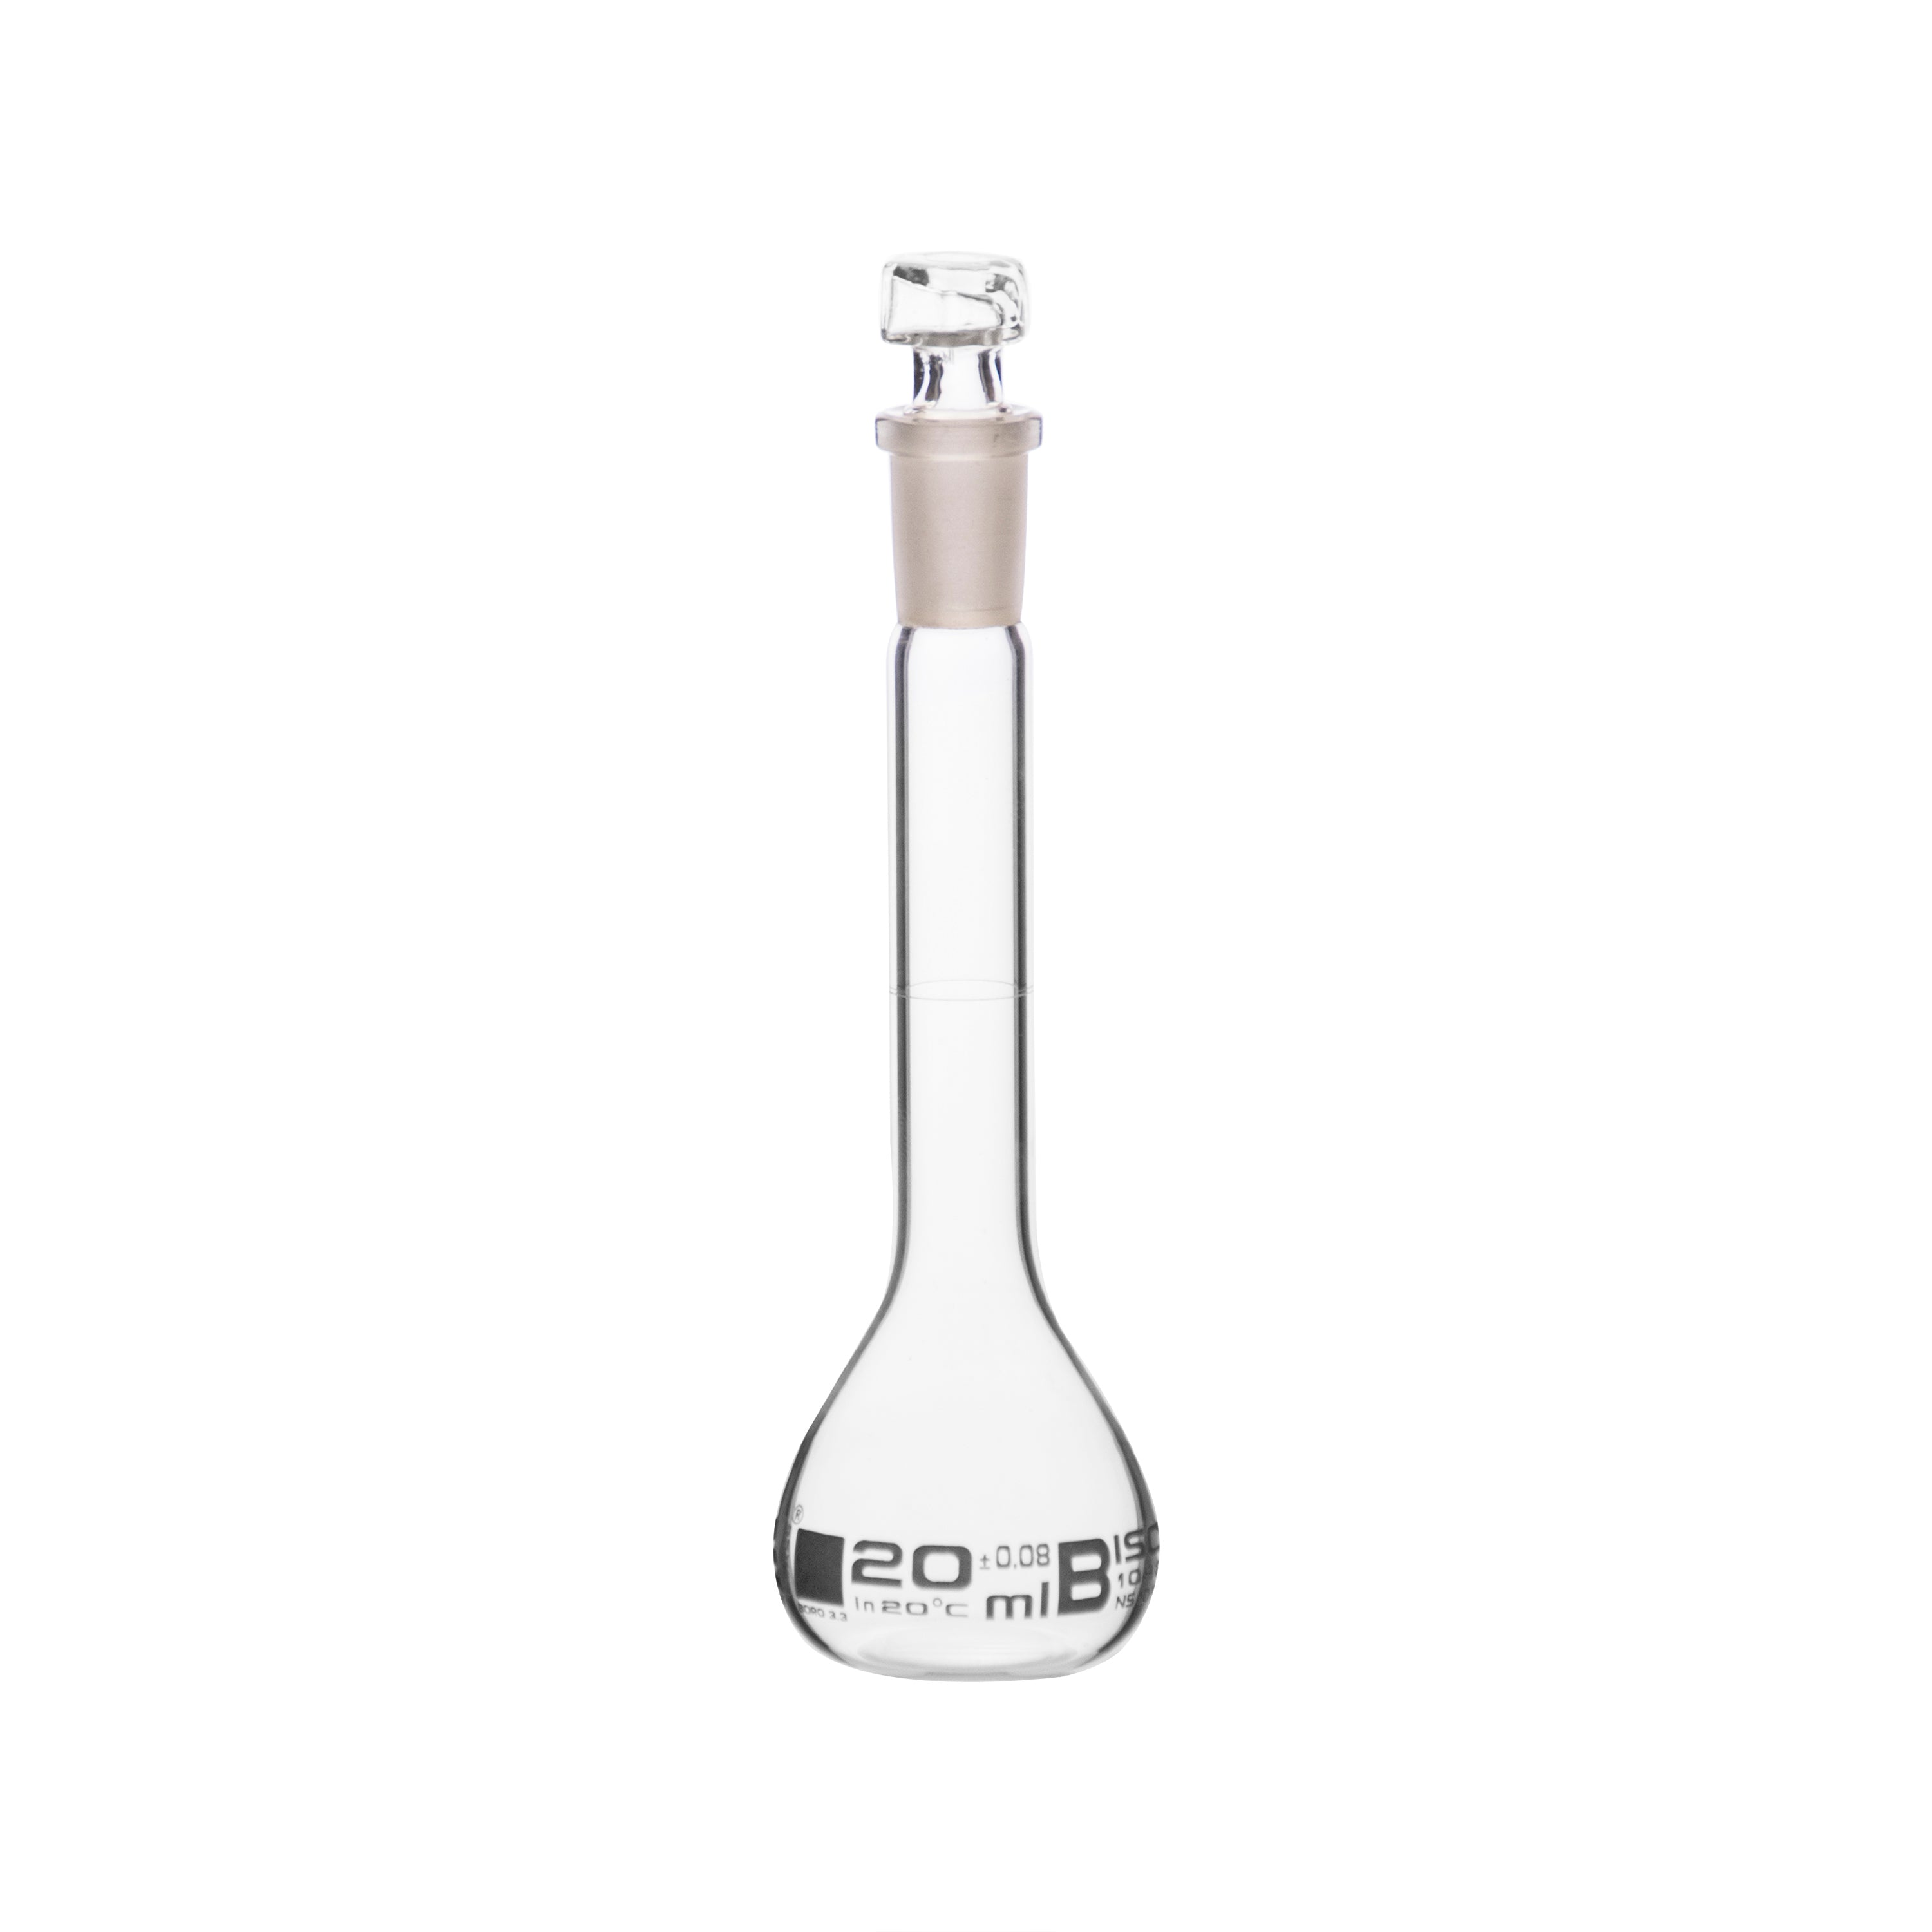 Borosilicate Volumetric Flask with Hollow Glass Stopper, 20ml, Class B, White Print, Autoclavable